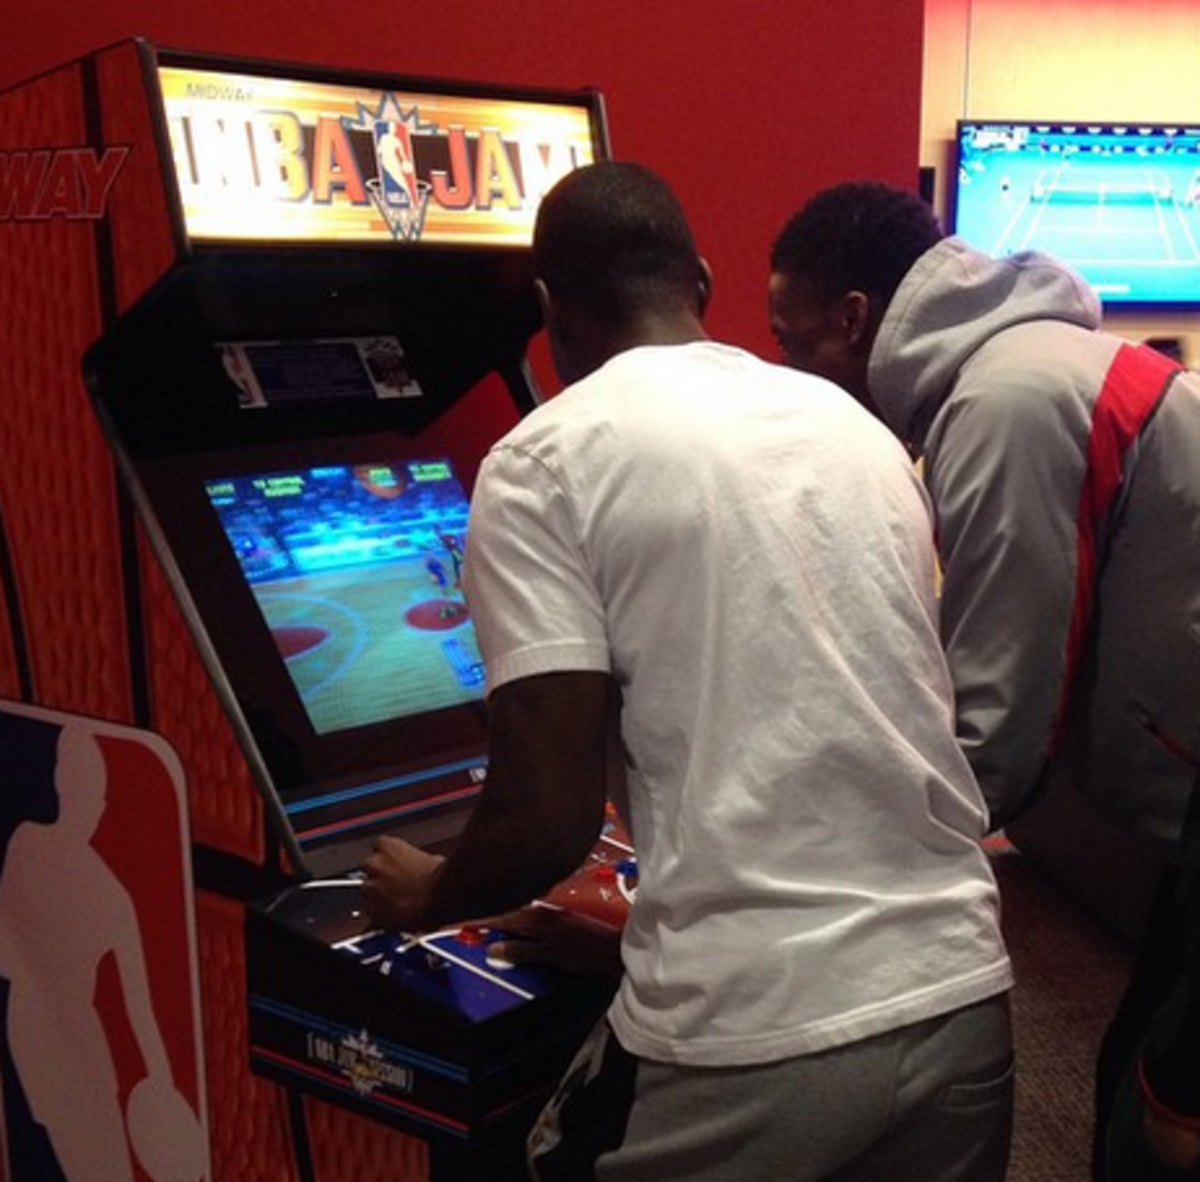 Ohio State's new NBA Jam arcade game.